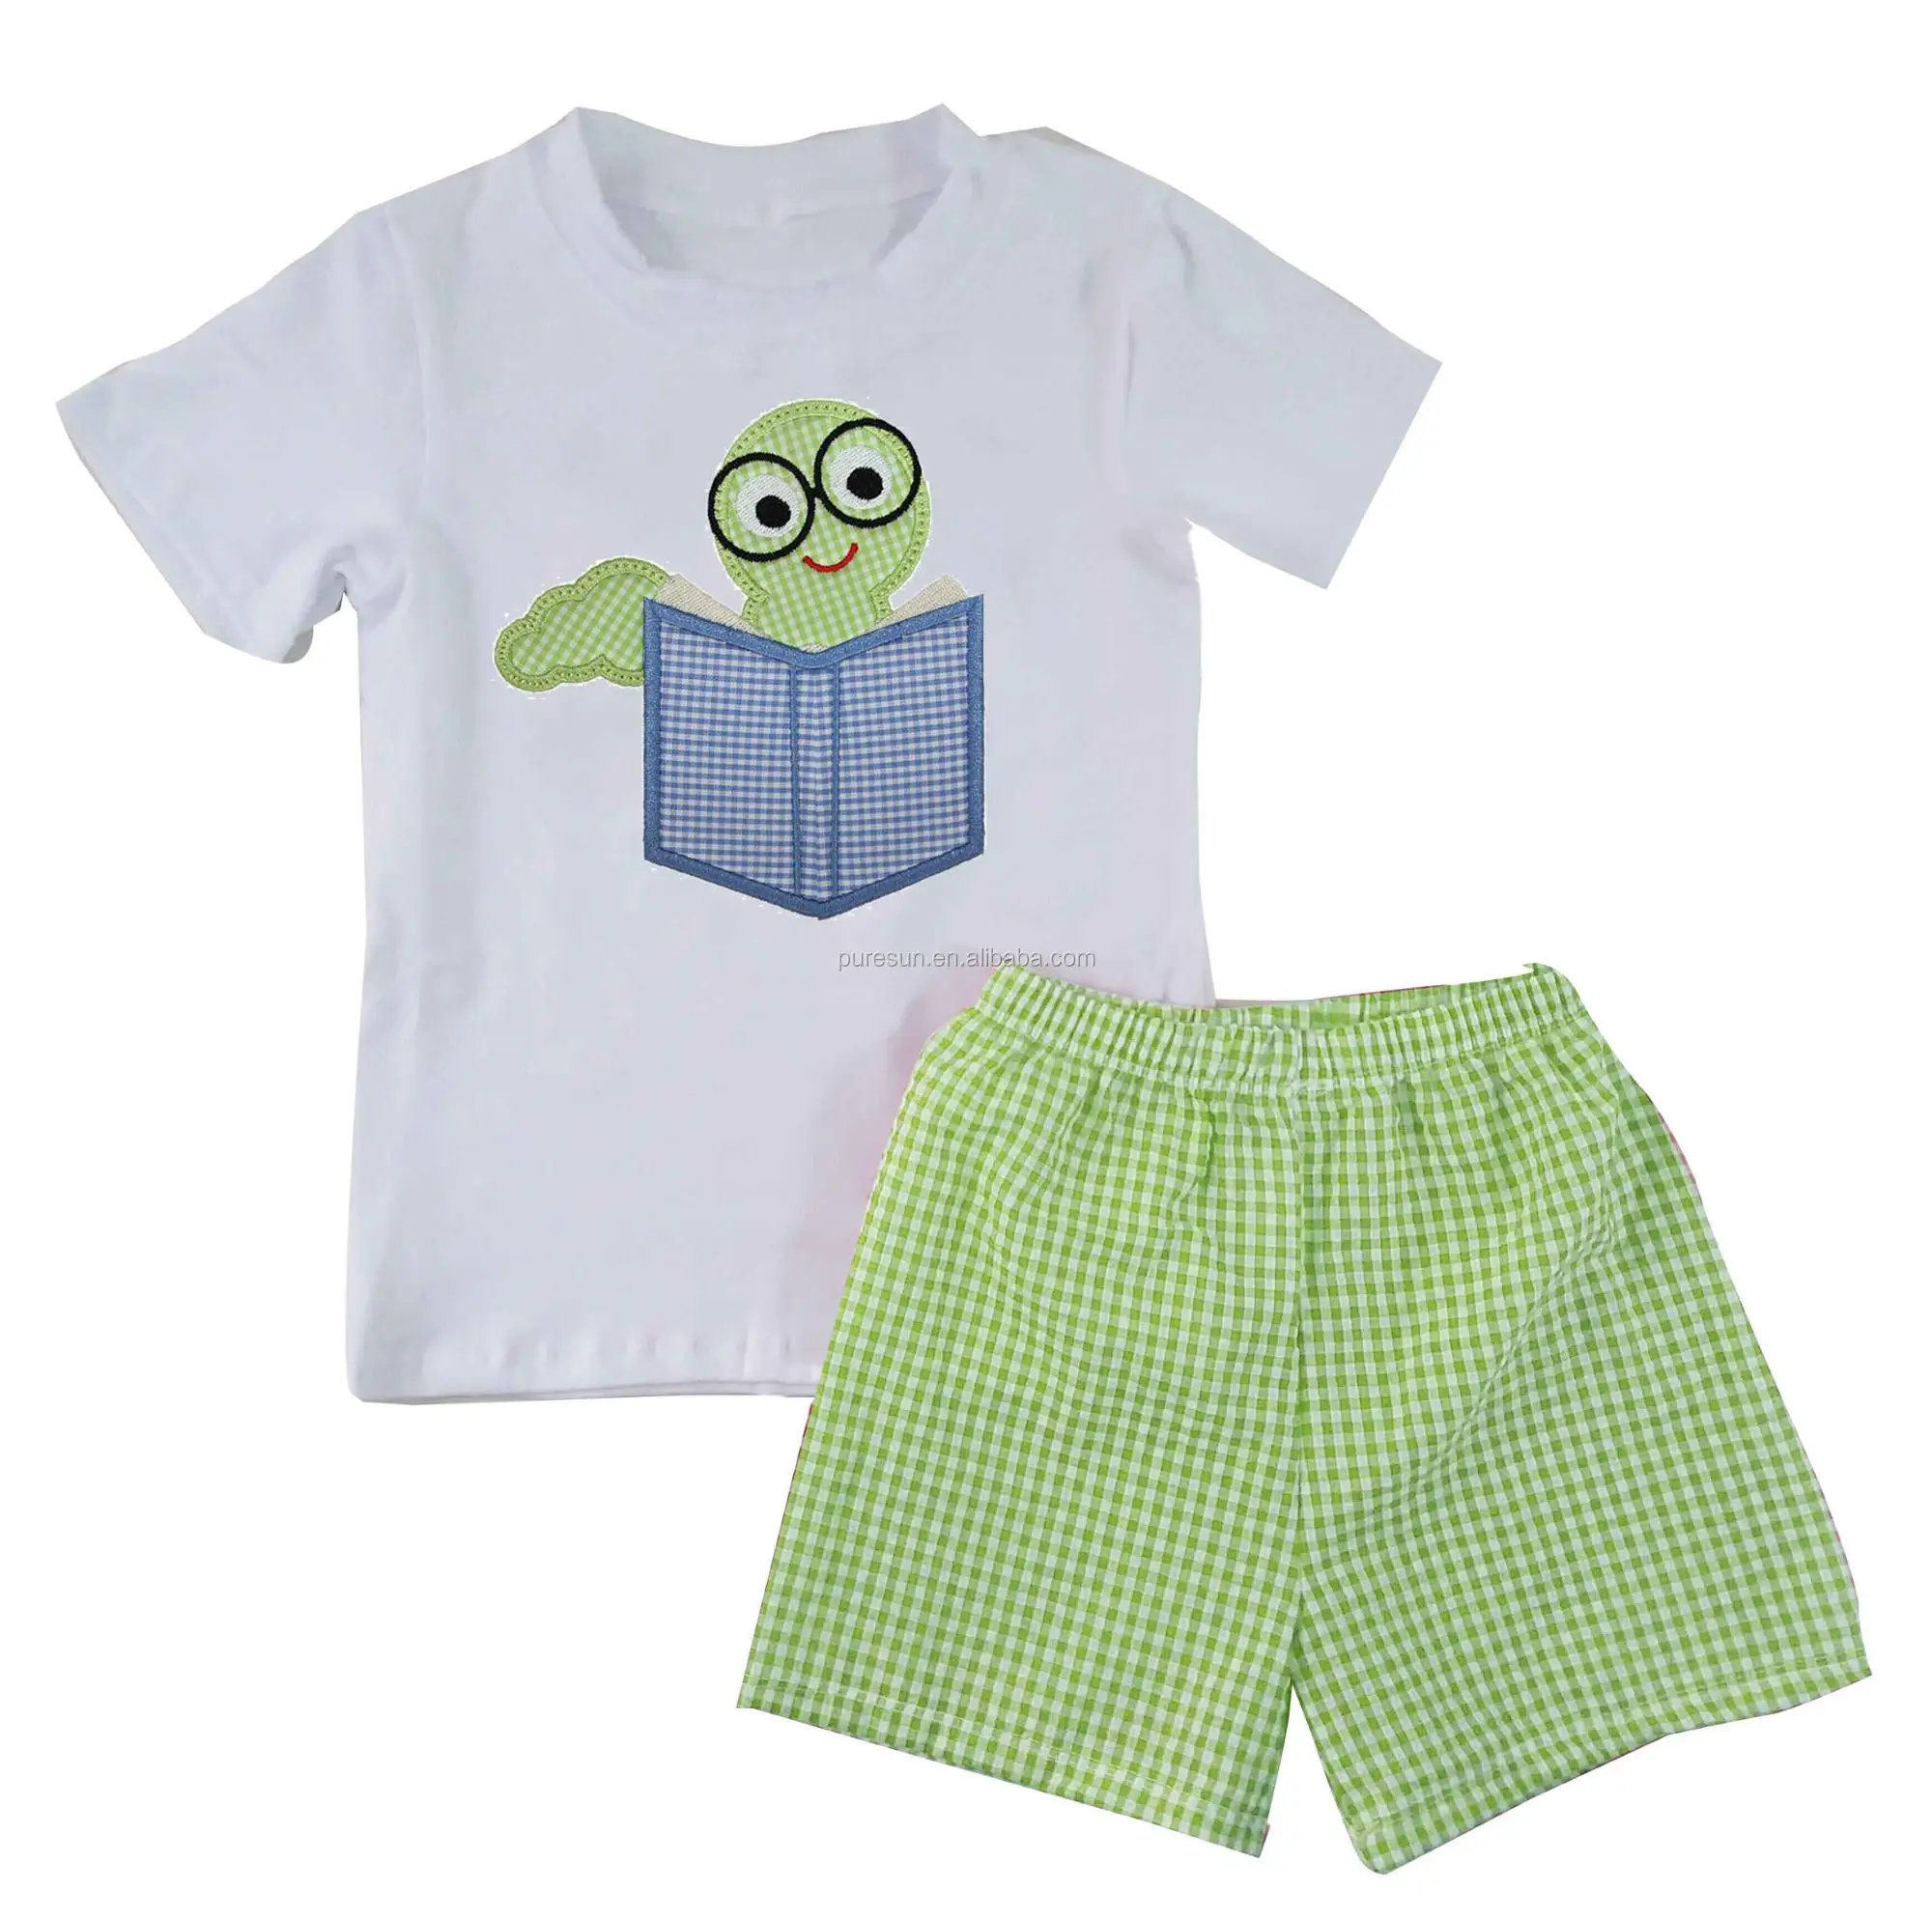 Wholesale Toddler Boys Boutique Outfits Kids Applique Clothing Sets ...